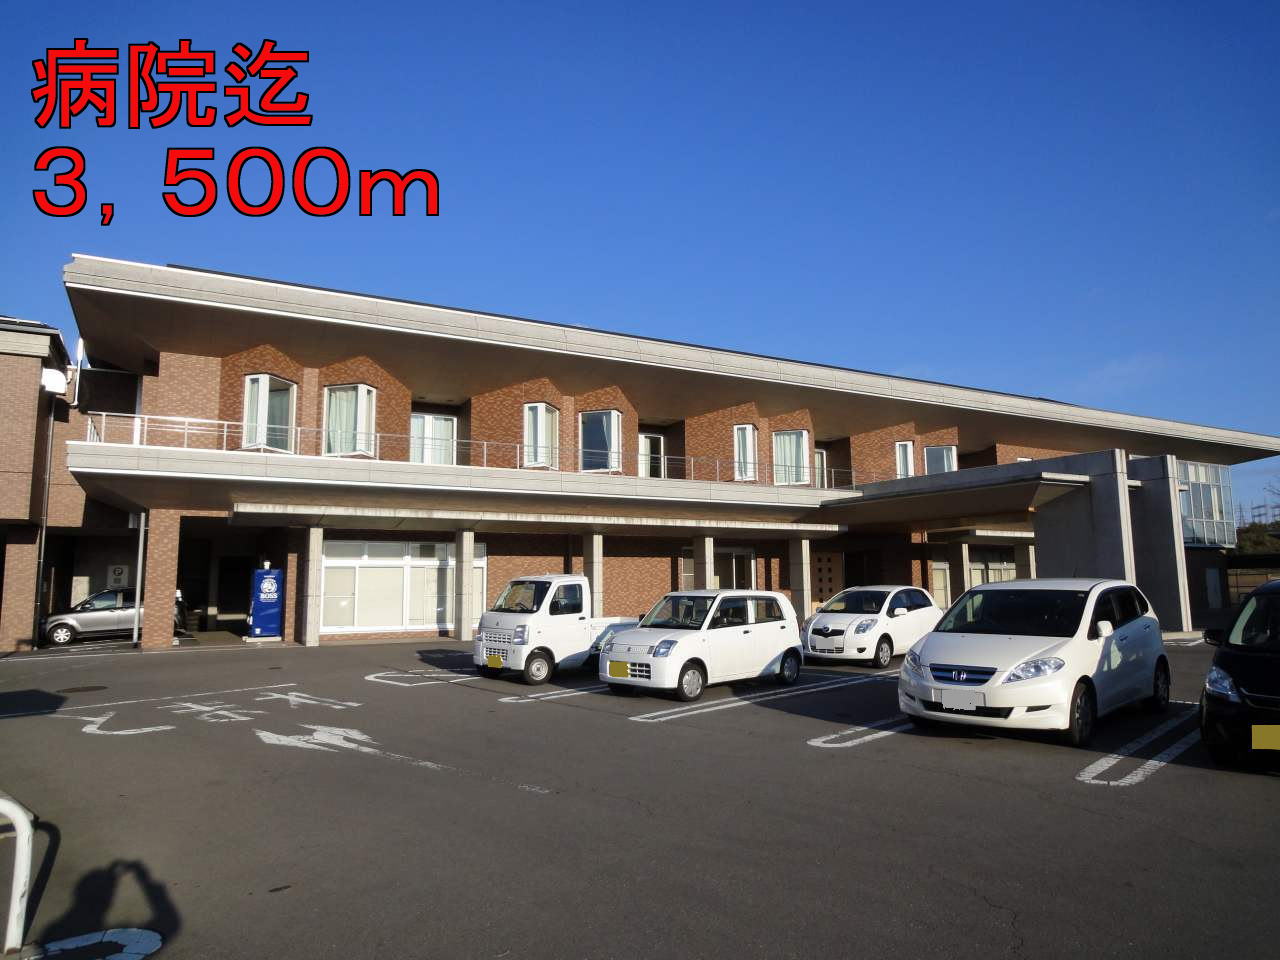 Hospital. Tomi City Hospital (hospital) to 3500m